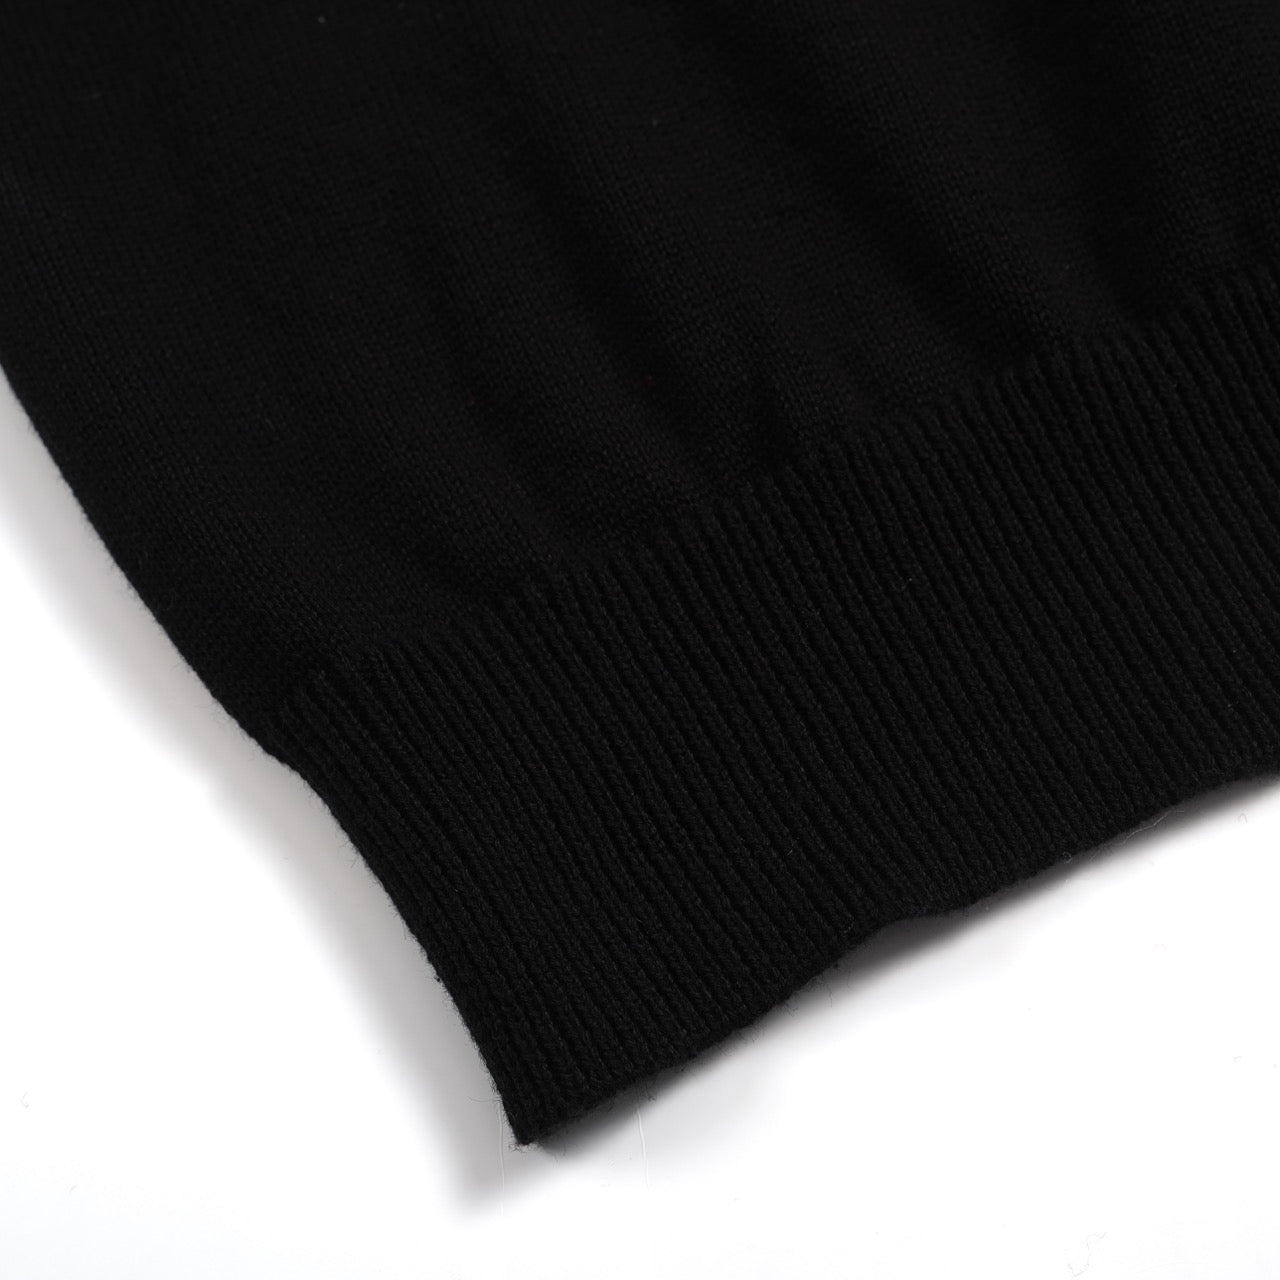 Women's Black Knitted T-Shirt With  Fairisle Stripe